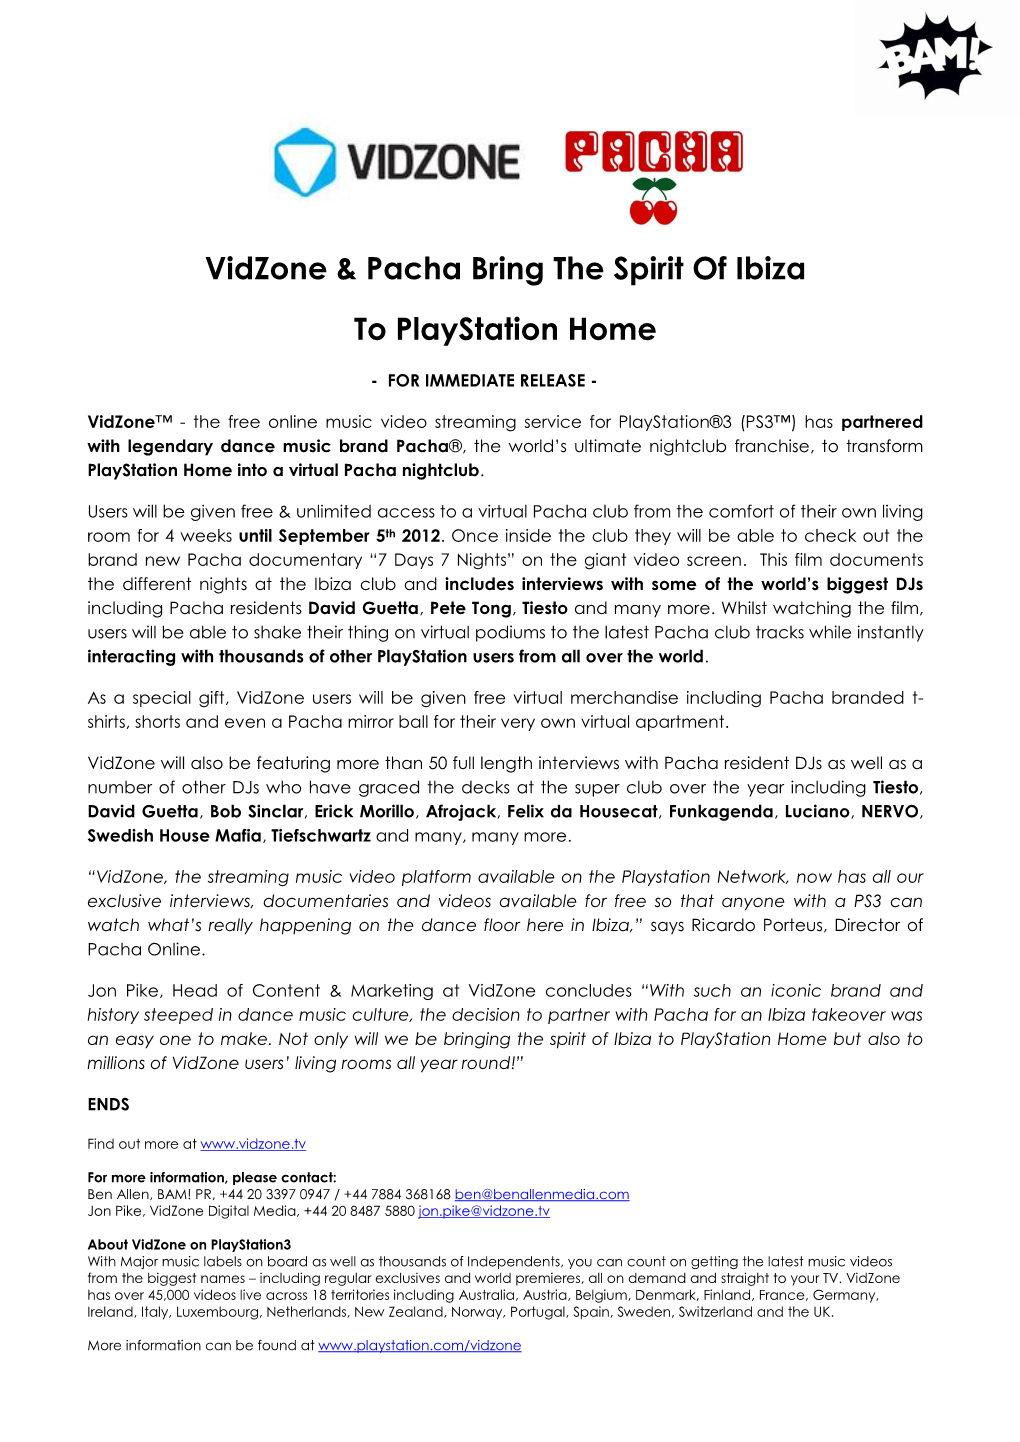 Vidzone & Pacha Bring the Spirit of Ibiza to Playstation Home